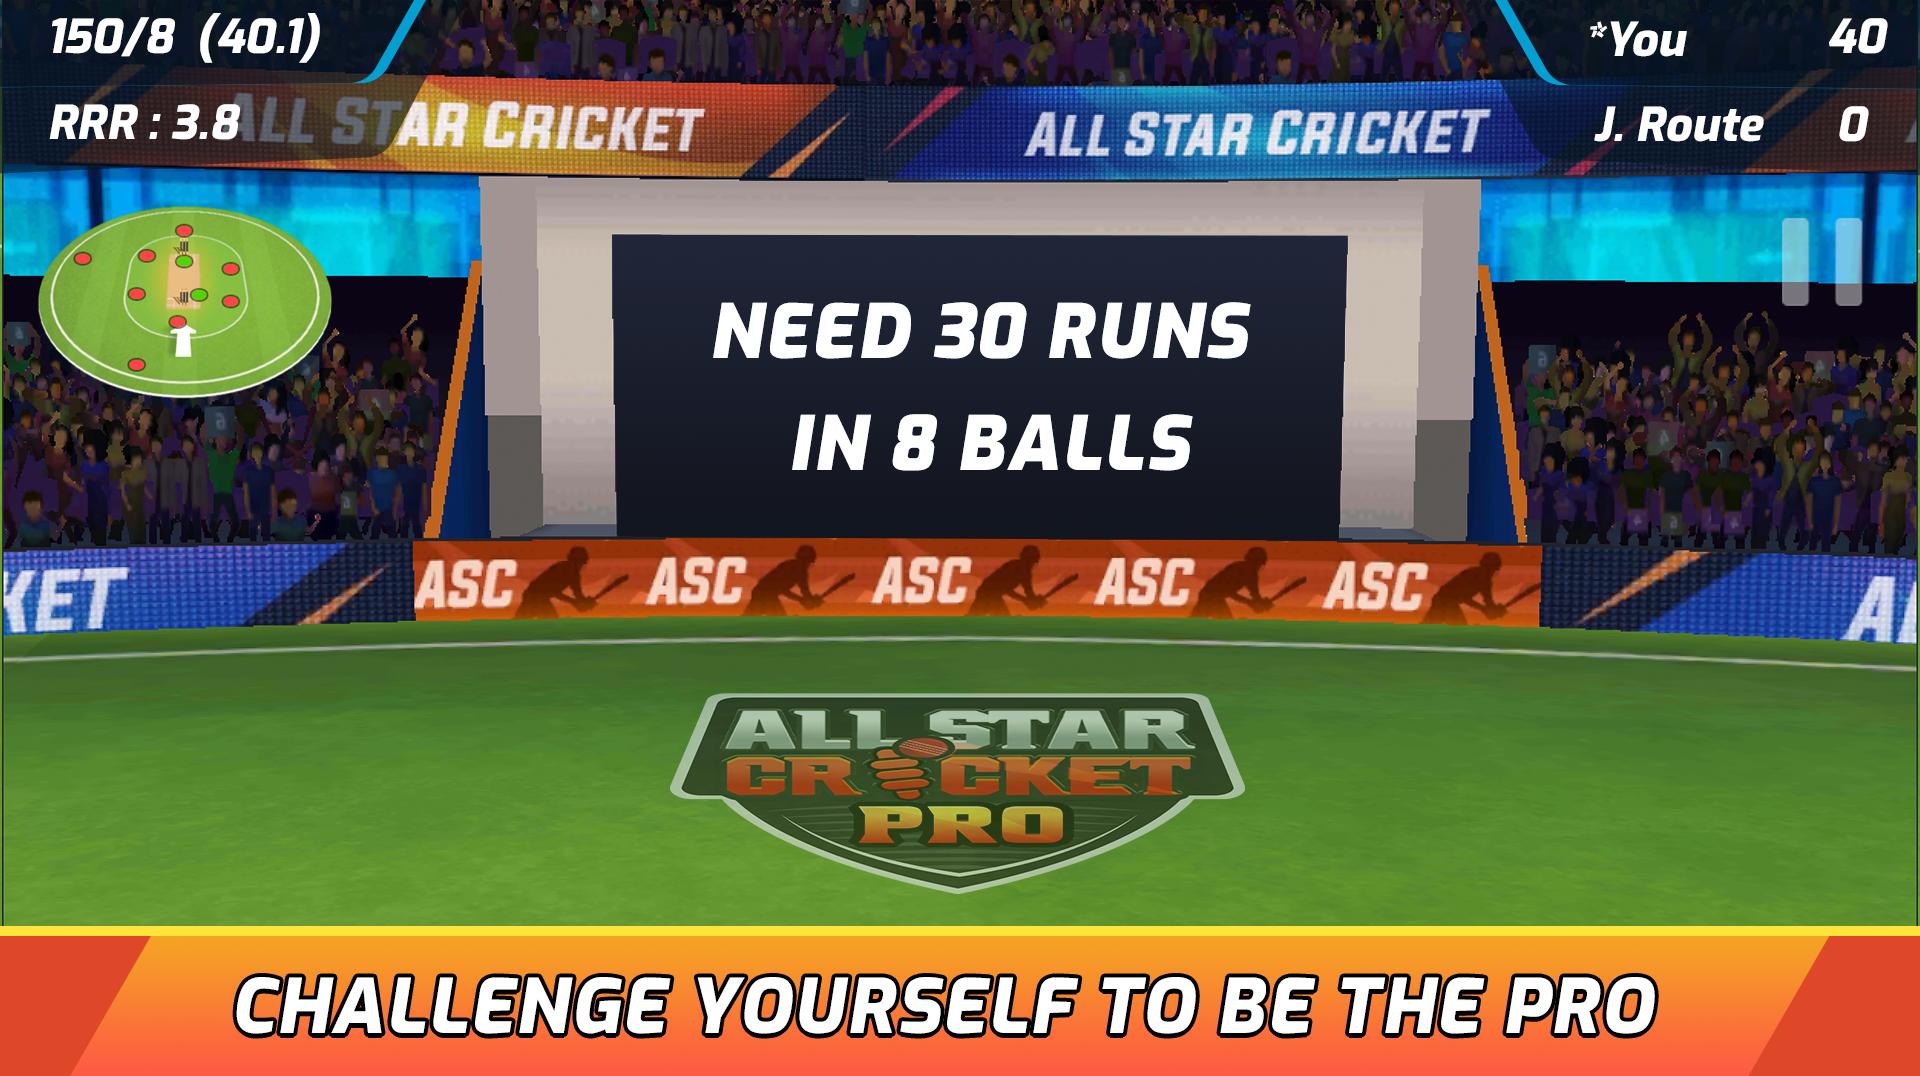 All Star Cricket Pro 0.0.3 Screenshot 15